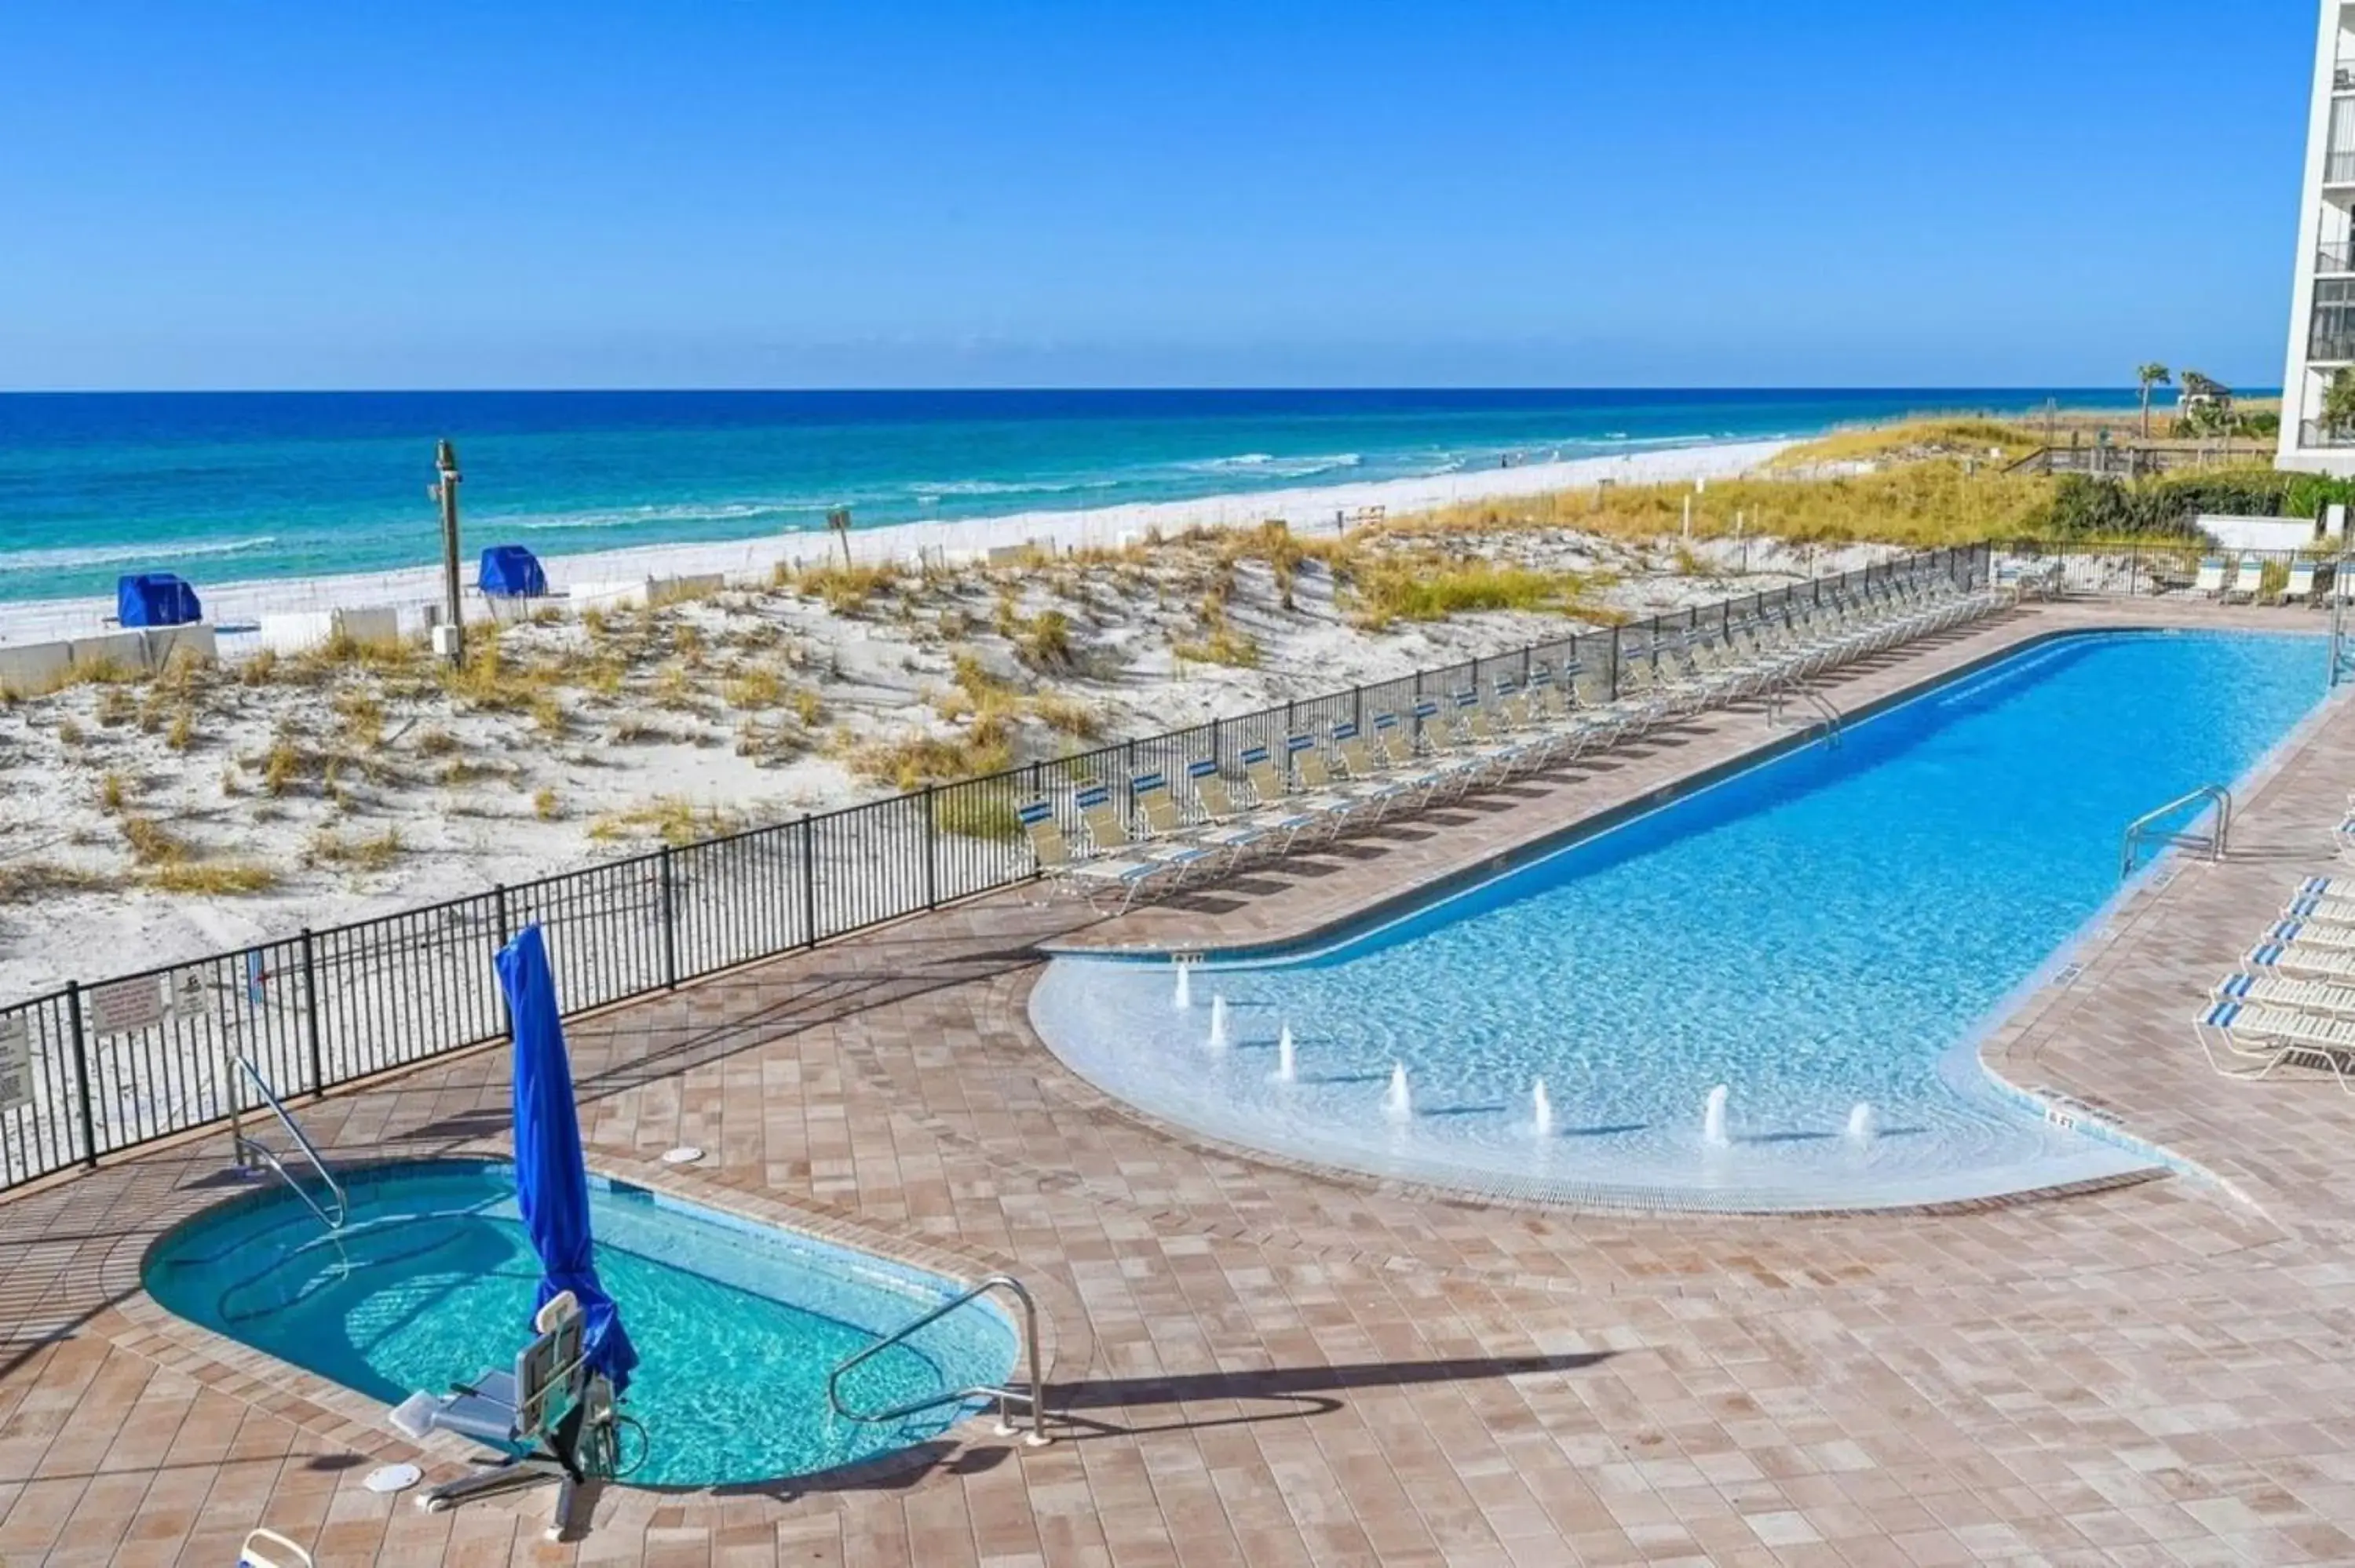 Hot Tub, Swimming Pool in Pelican Beach Resort by ResortQuest